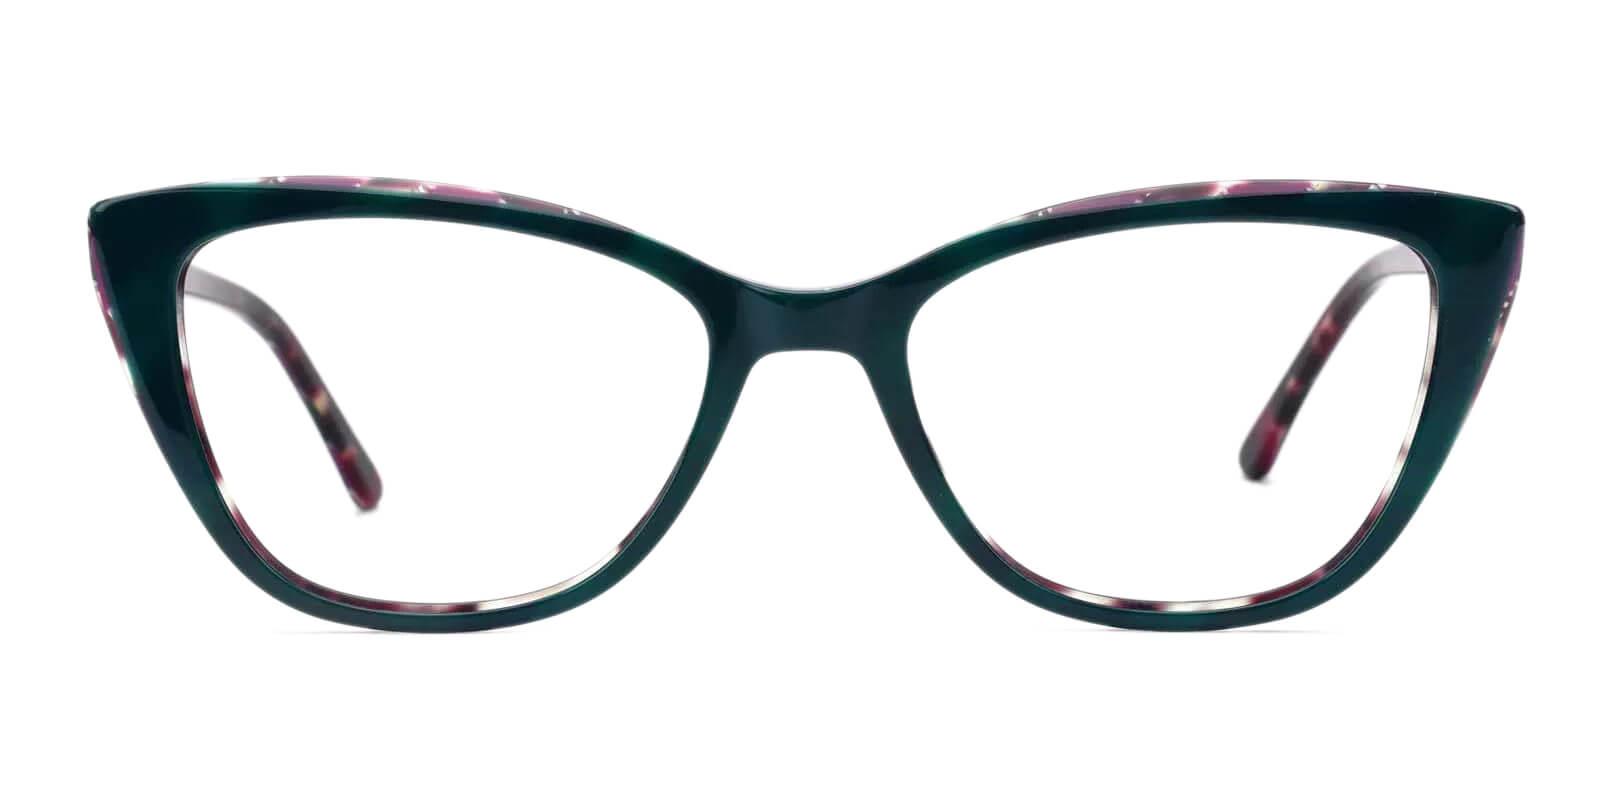 Teddy Green Acetate Eyeglasses , Fashion , SpringHinges , UniversalBridgeFit Frames from ABBE Glasses